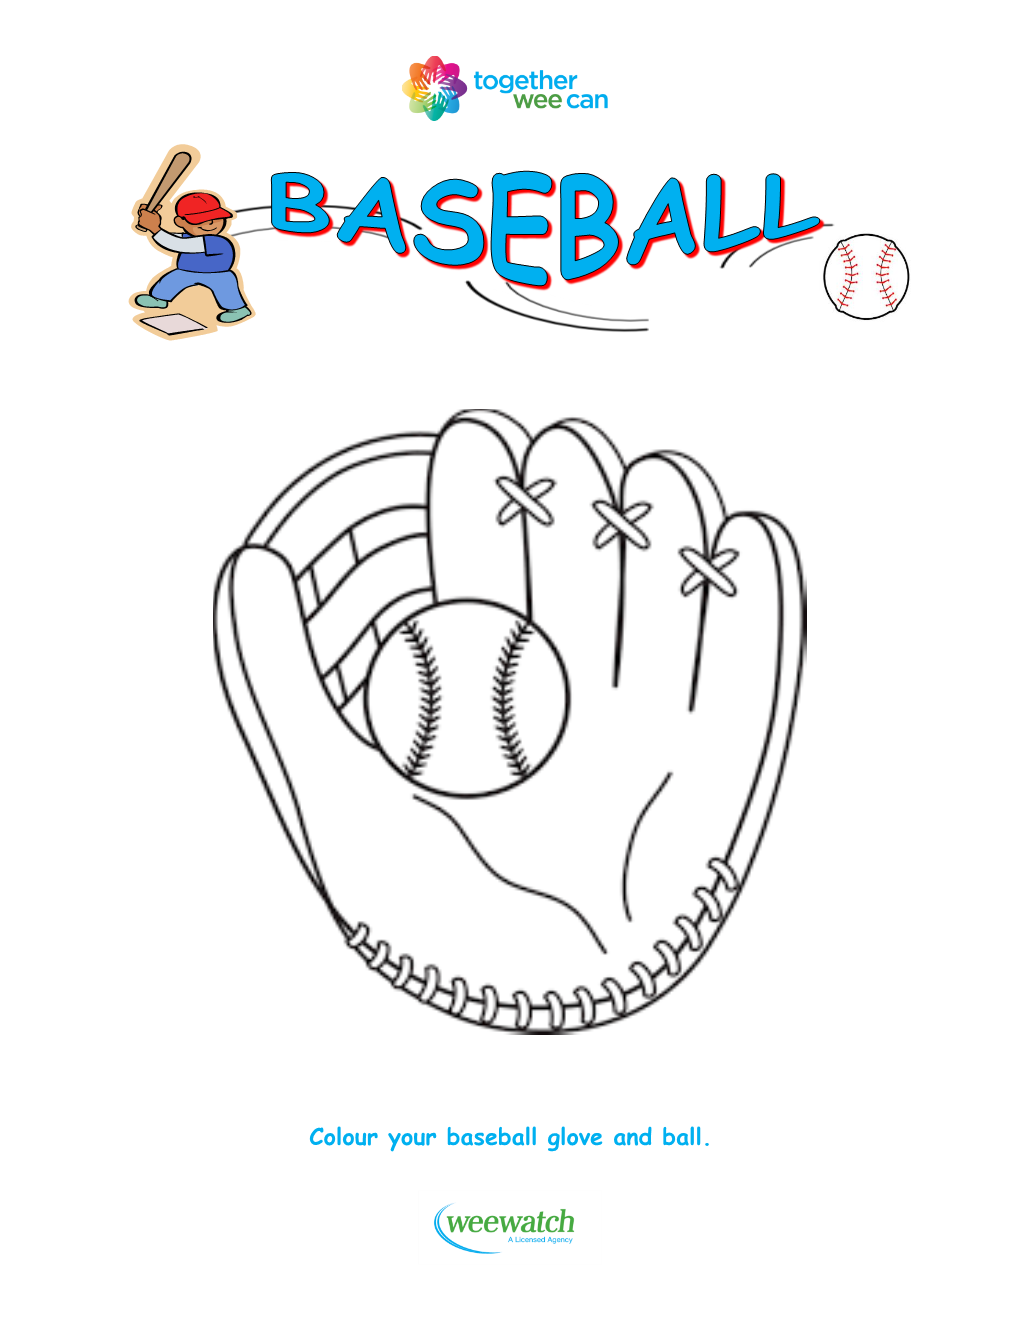 Colour Your Baseball Glove and Ball